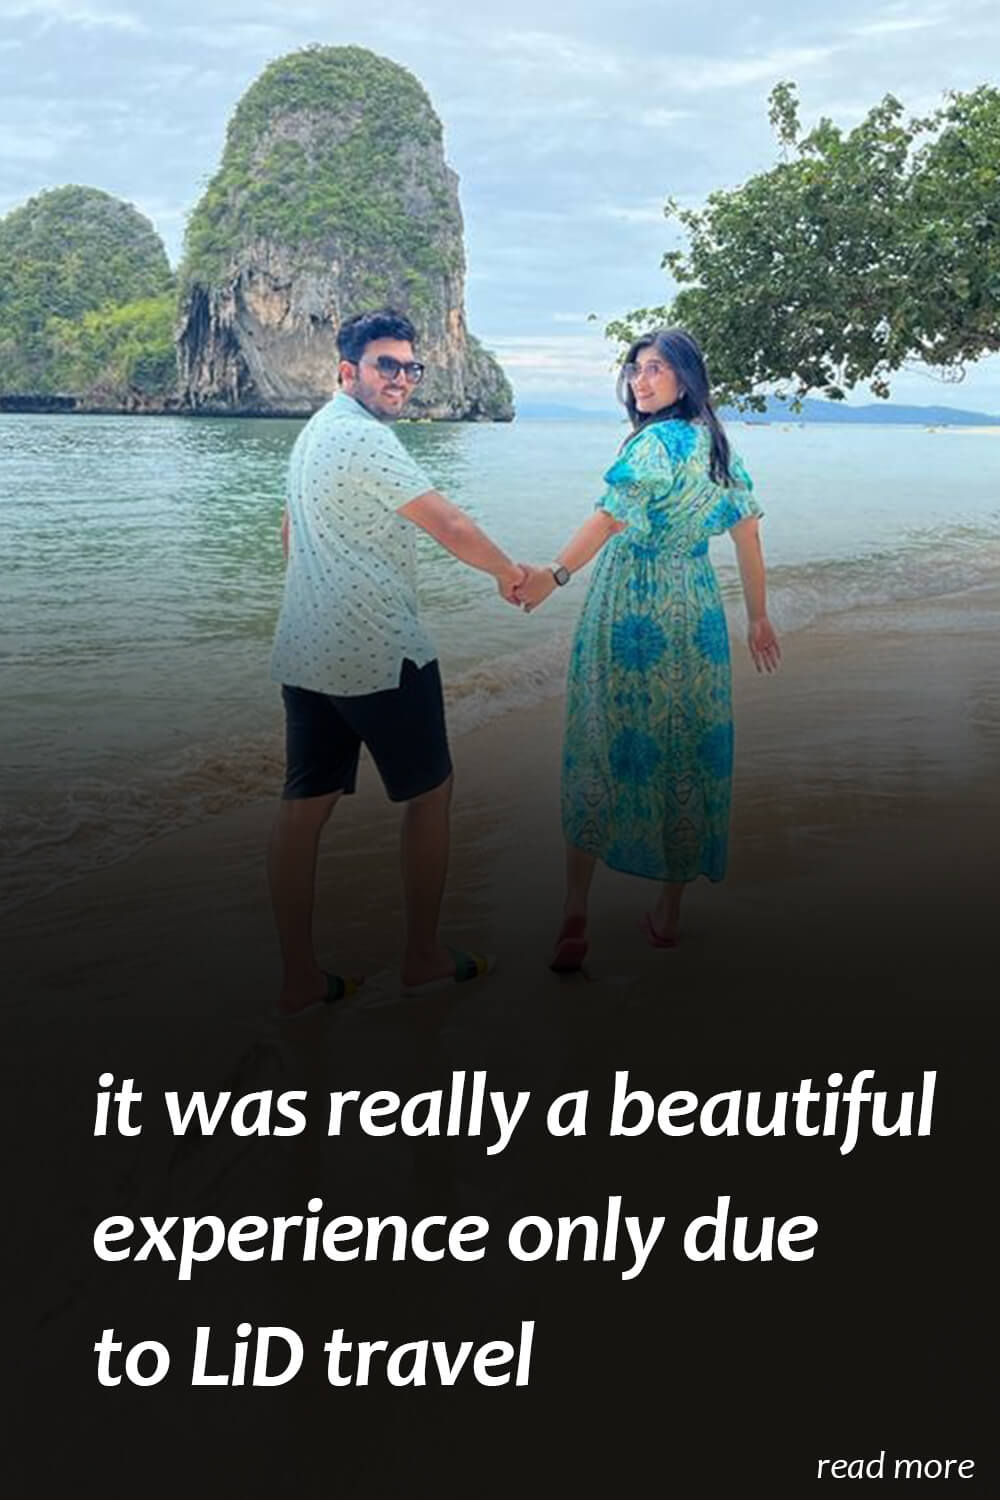 phuket krabi honeymoon tour experience with LiD travel